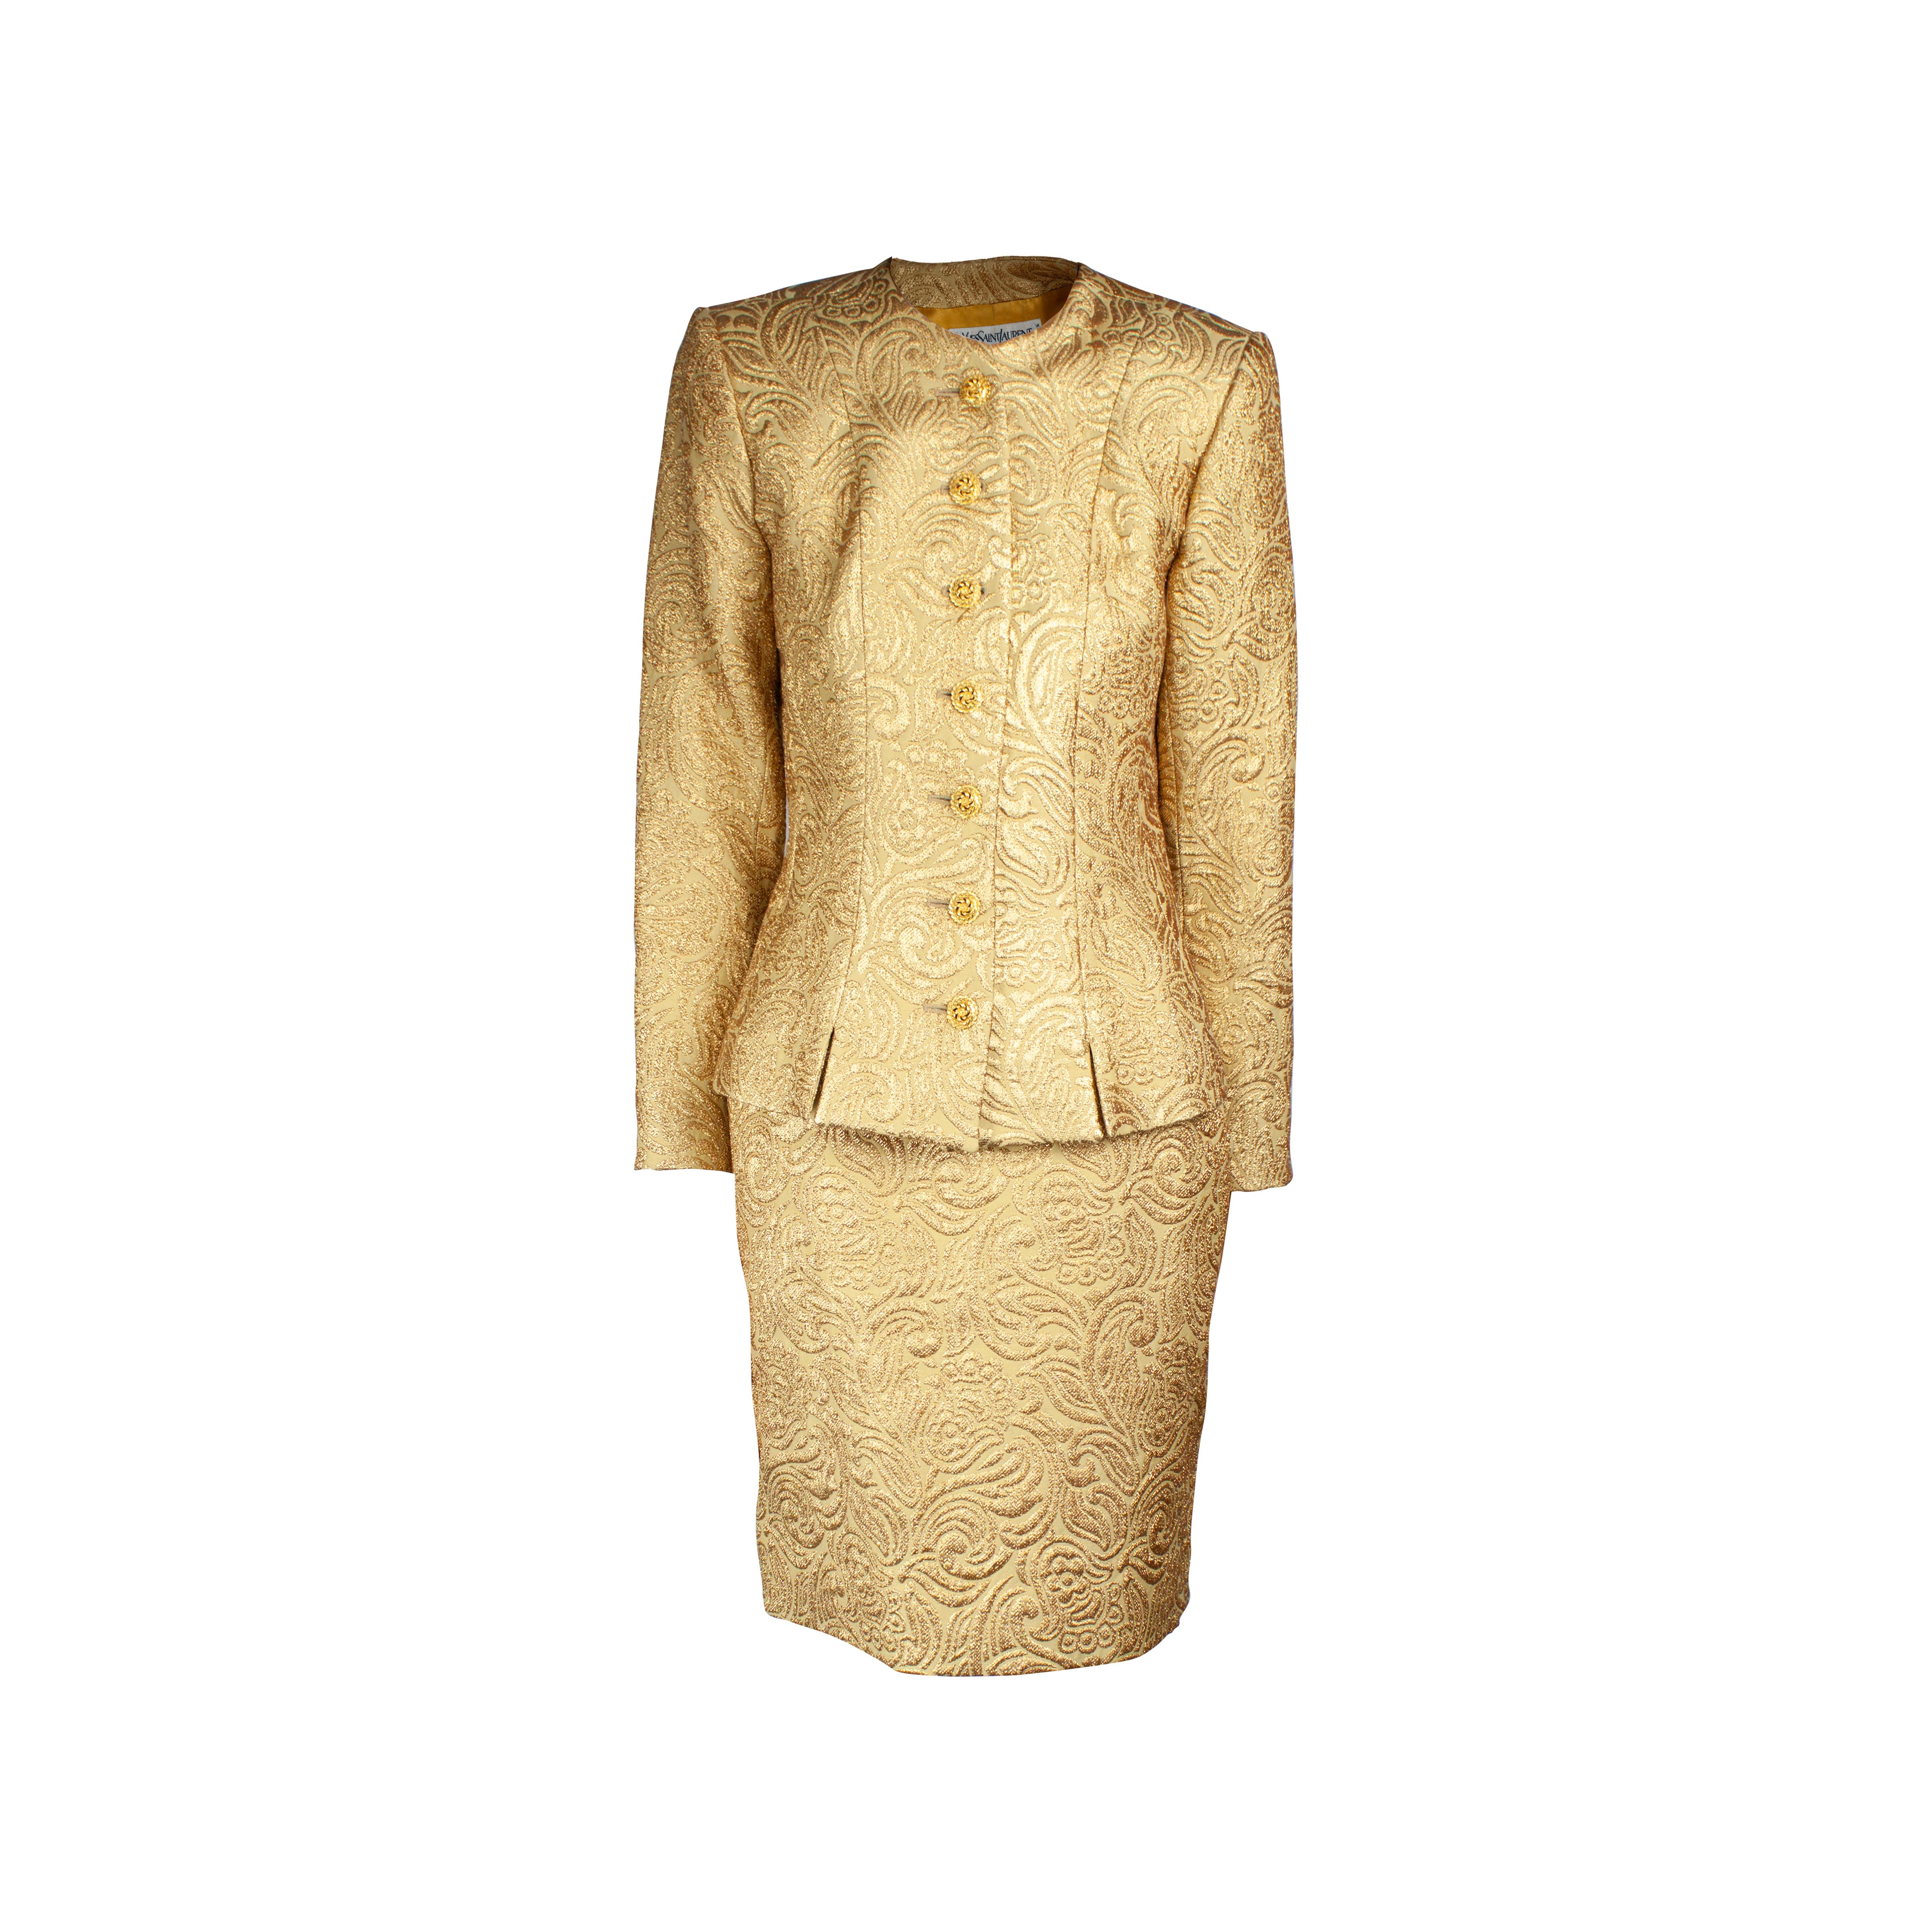 Yves Saint Laurent Chinese collection gold brocade skirt ensemble.circa 1980